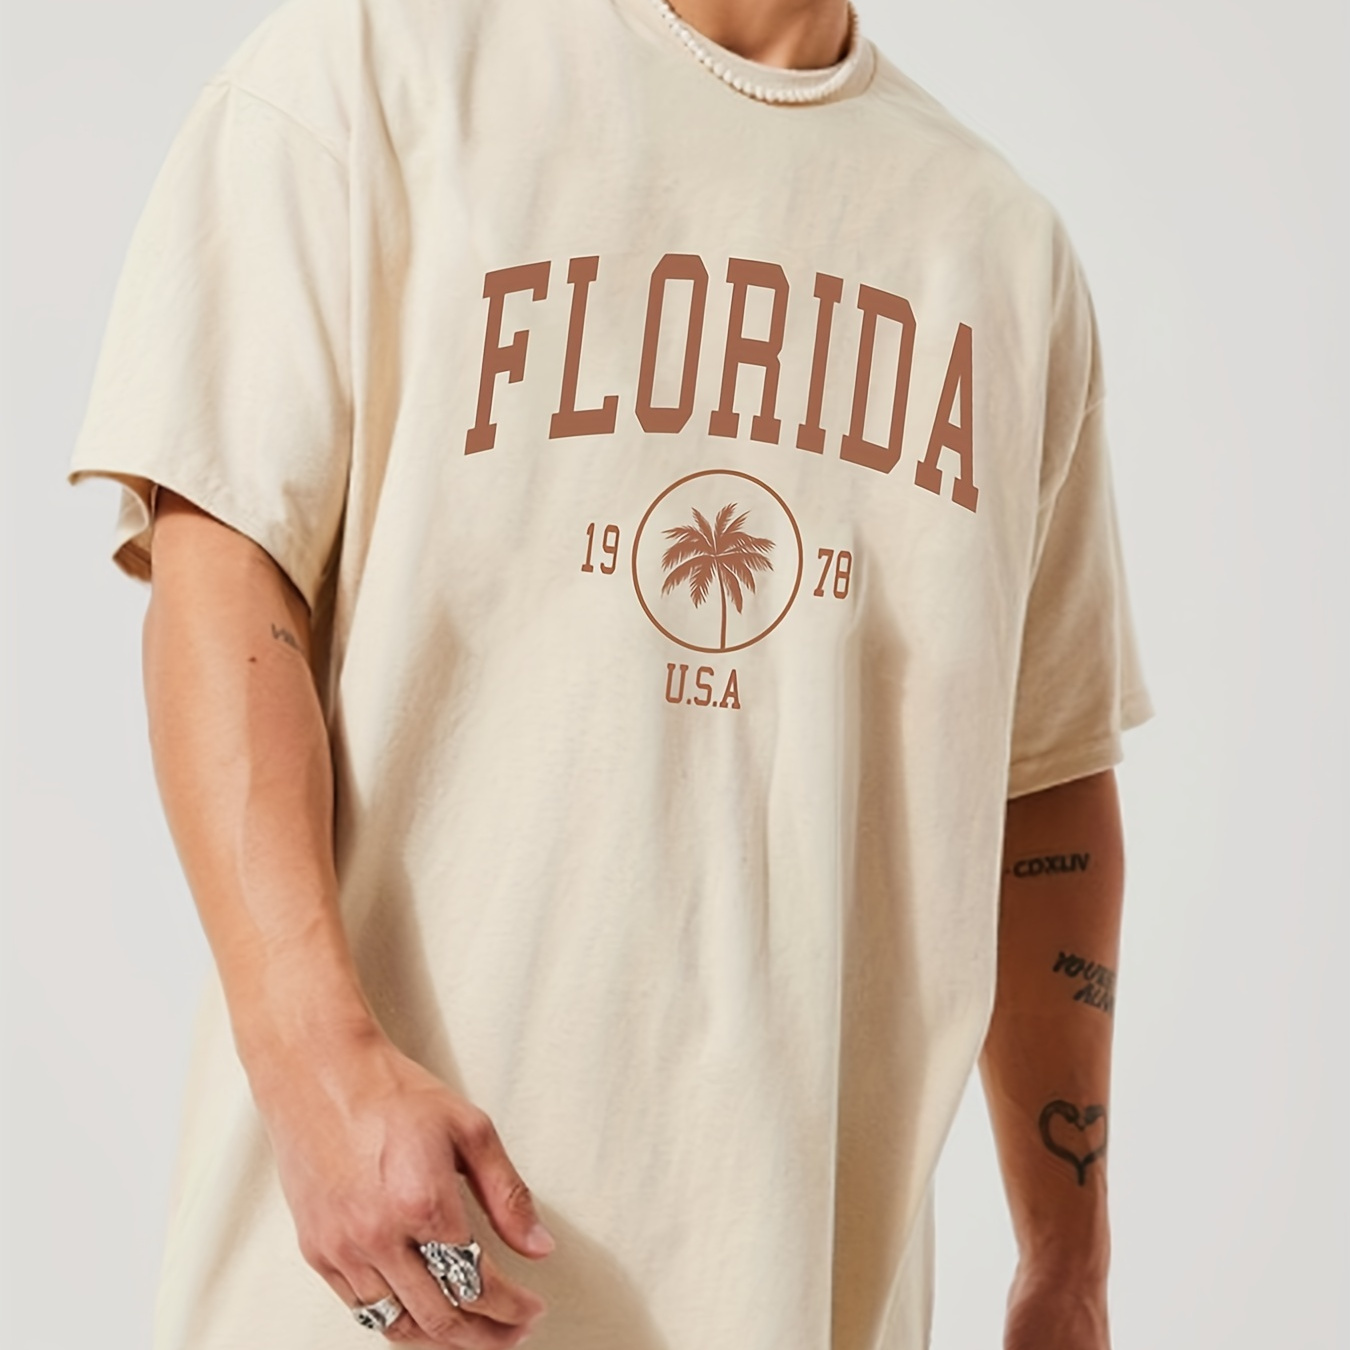 

Florida Letter Print Men's T-shirt For Summer Beach Vacation, Men's Trendy Graphic Crew Neck Tops